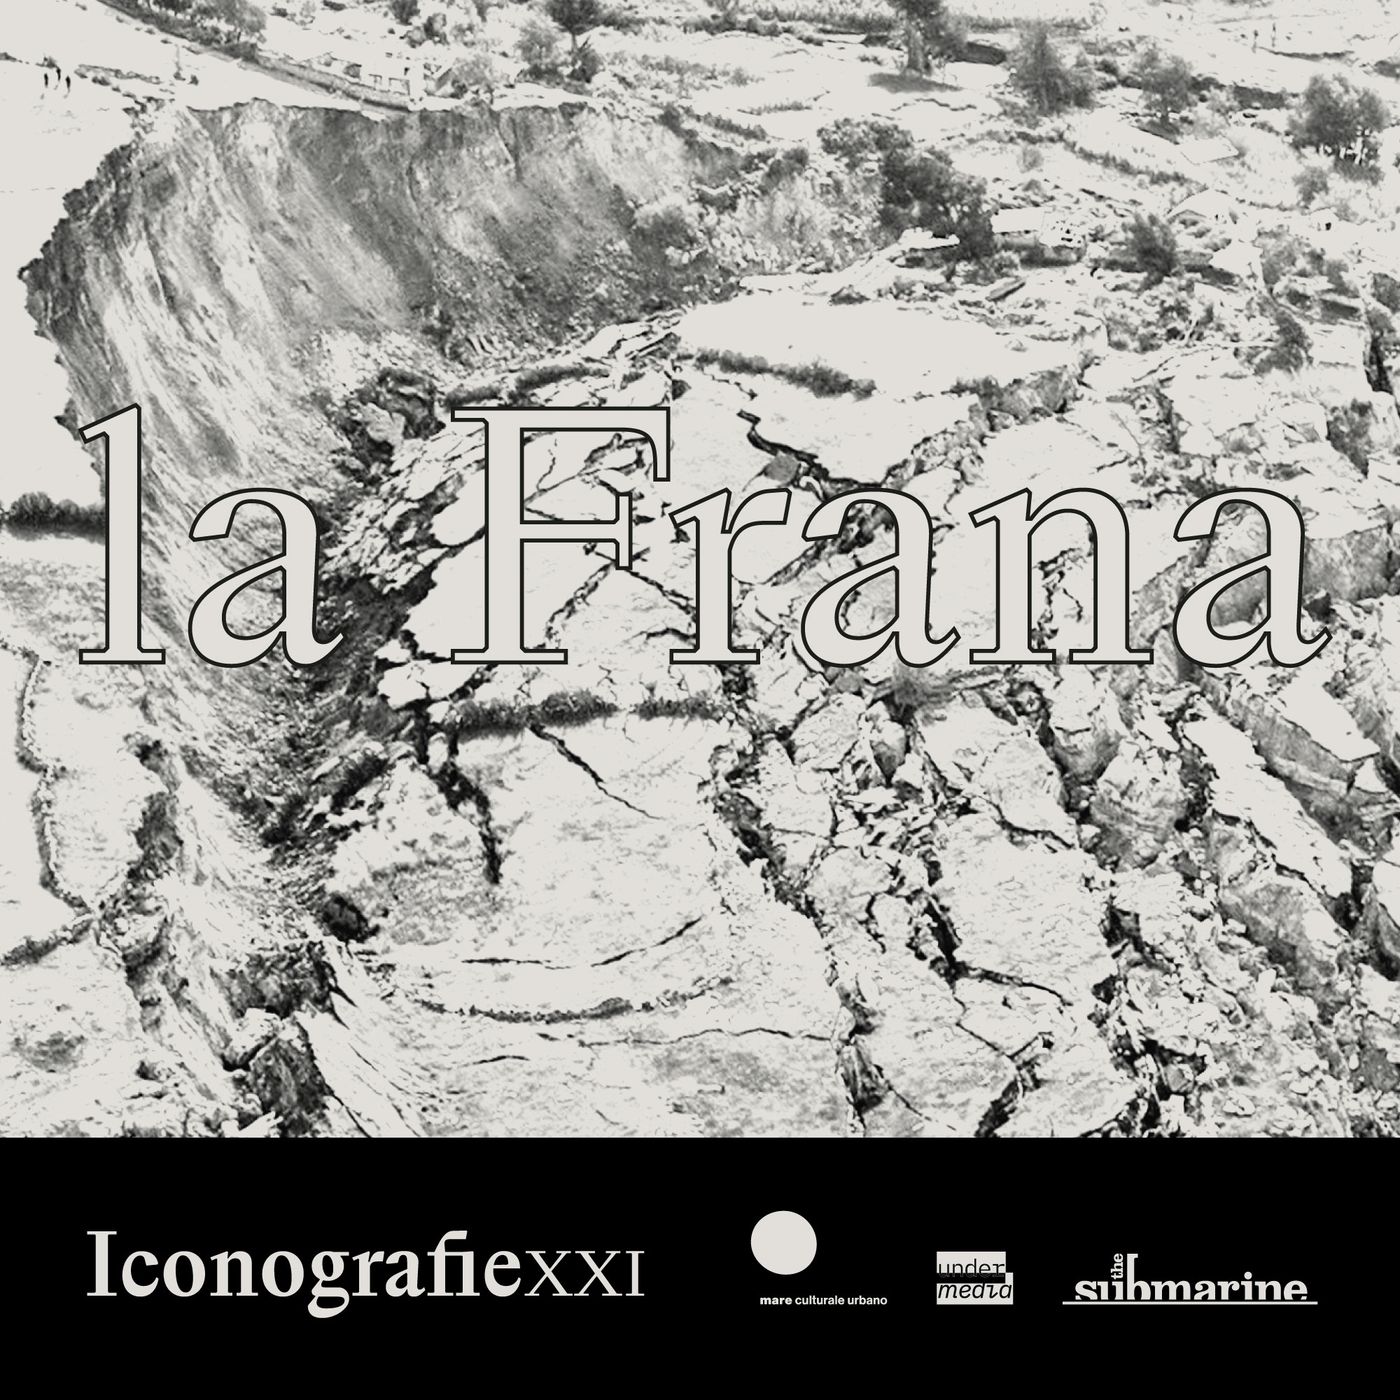 IconografieXXI: La Frana